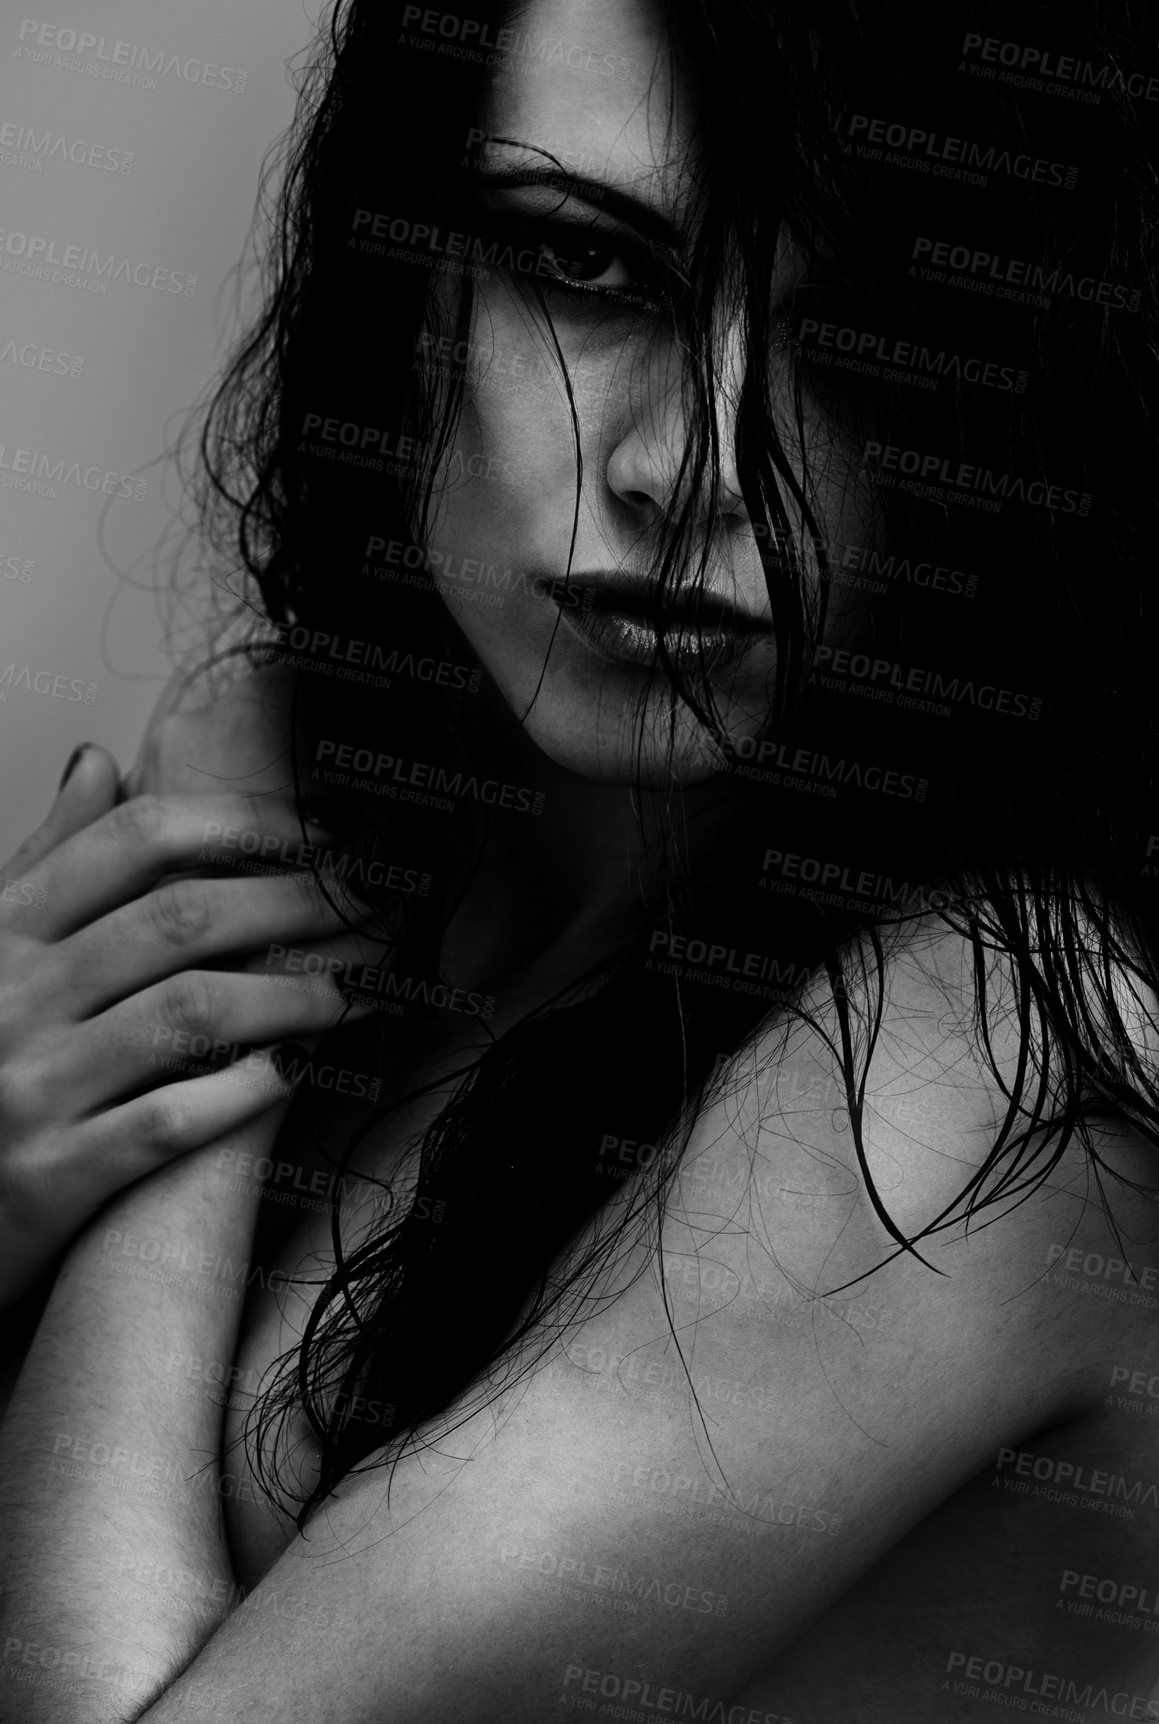 Buy stock photo Monochrome portrait of a gorgeous nude woman